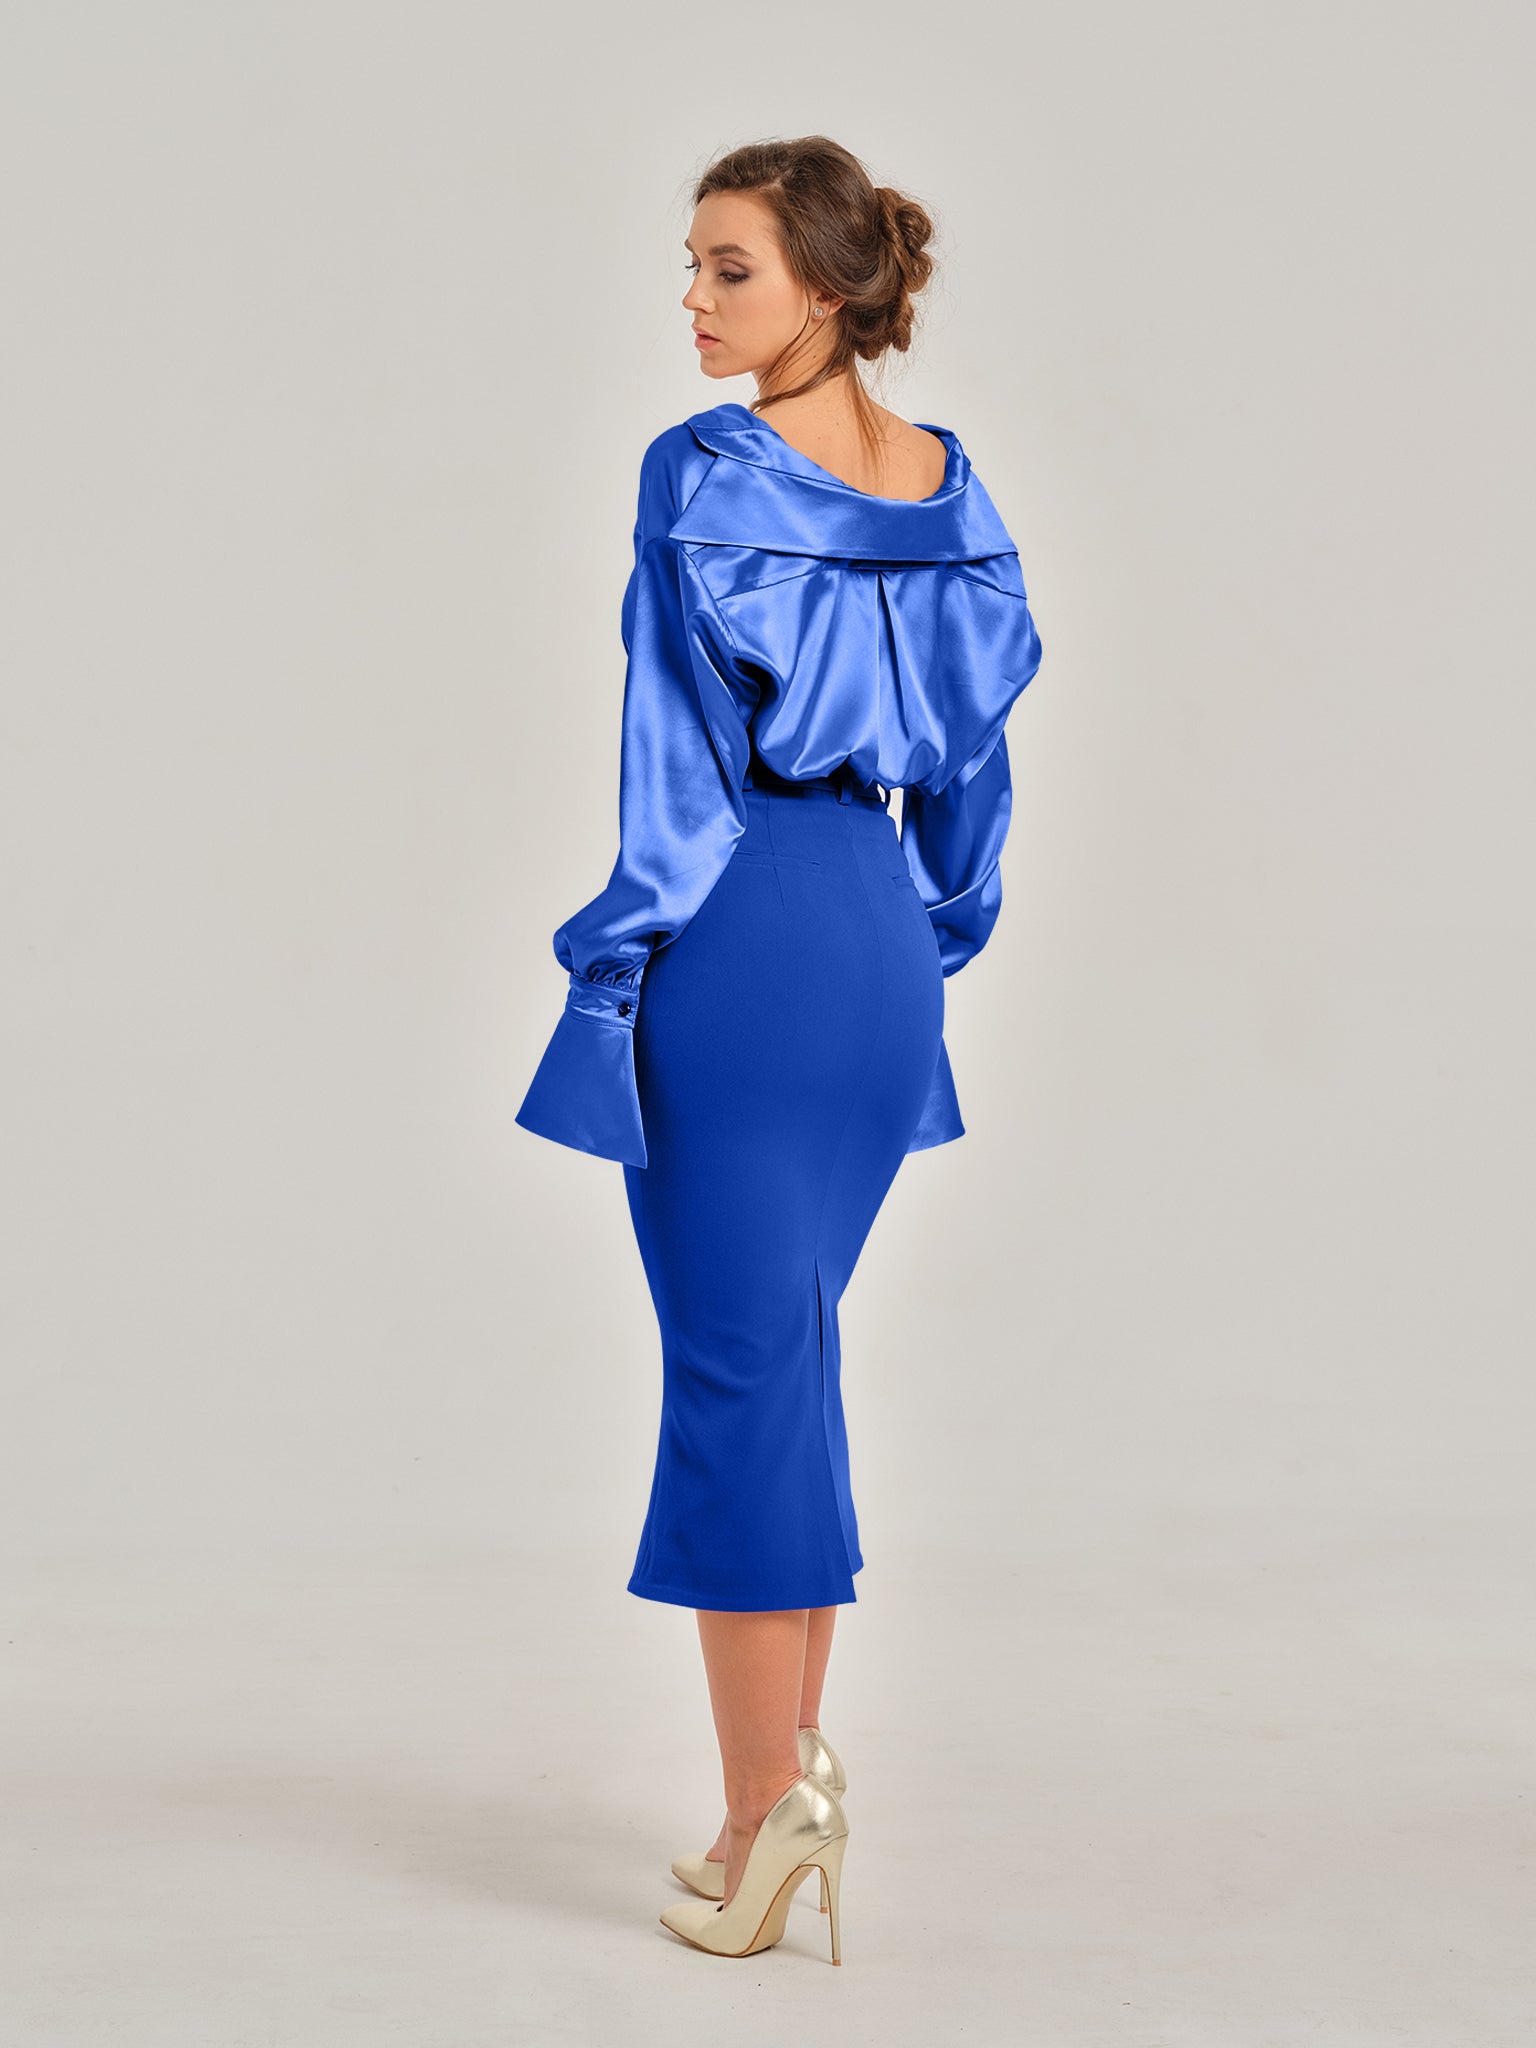 Royal Azure Trumpet Midi Skirt by Tia Dorraine Women's Luxury Fashion Designer Clothing Brand